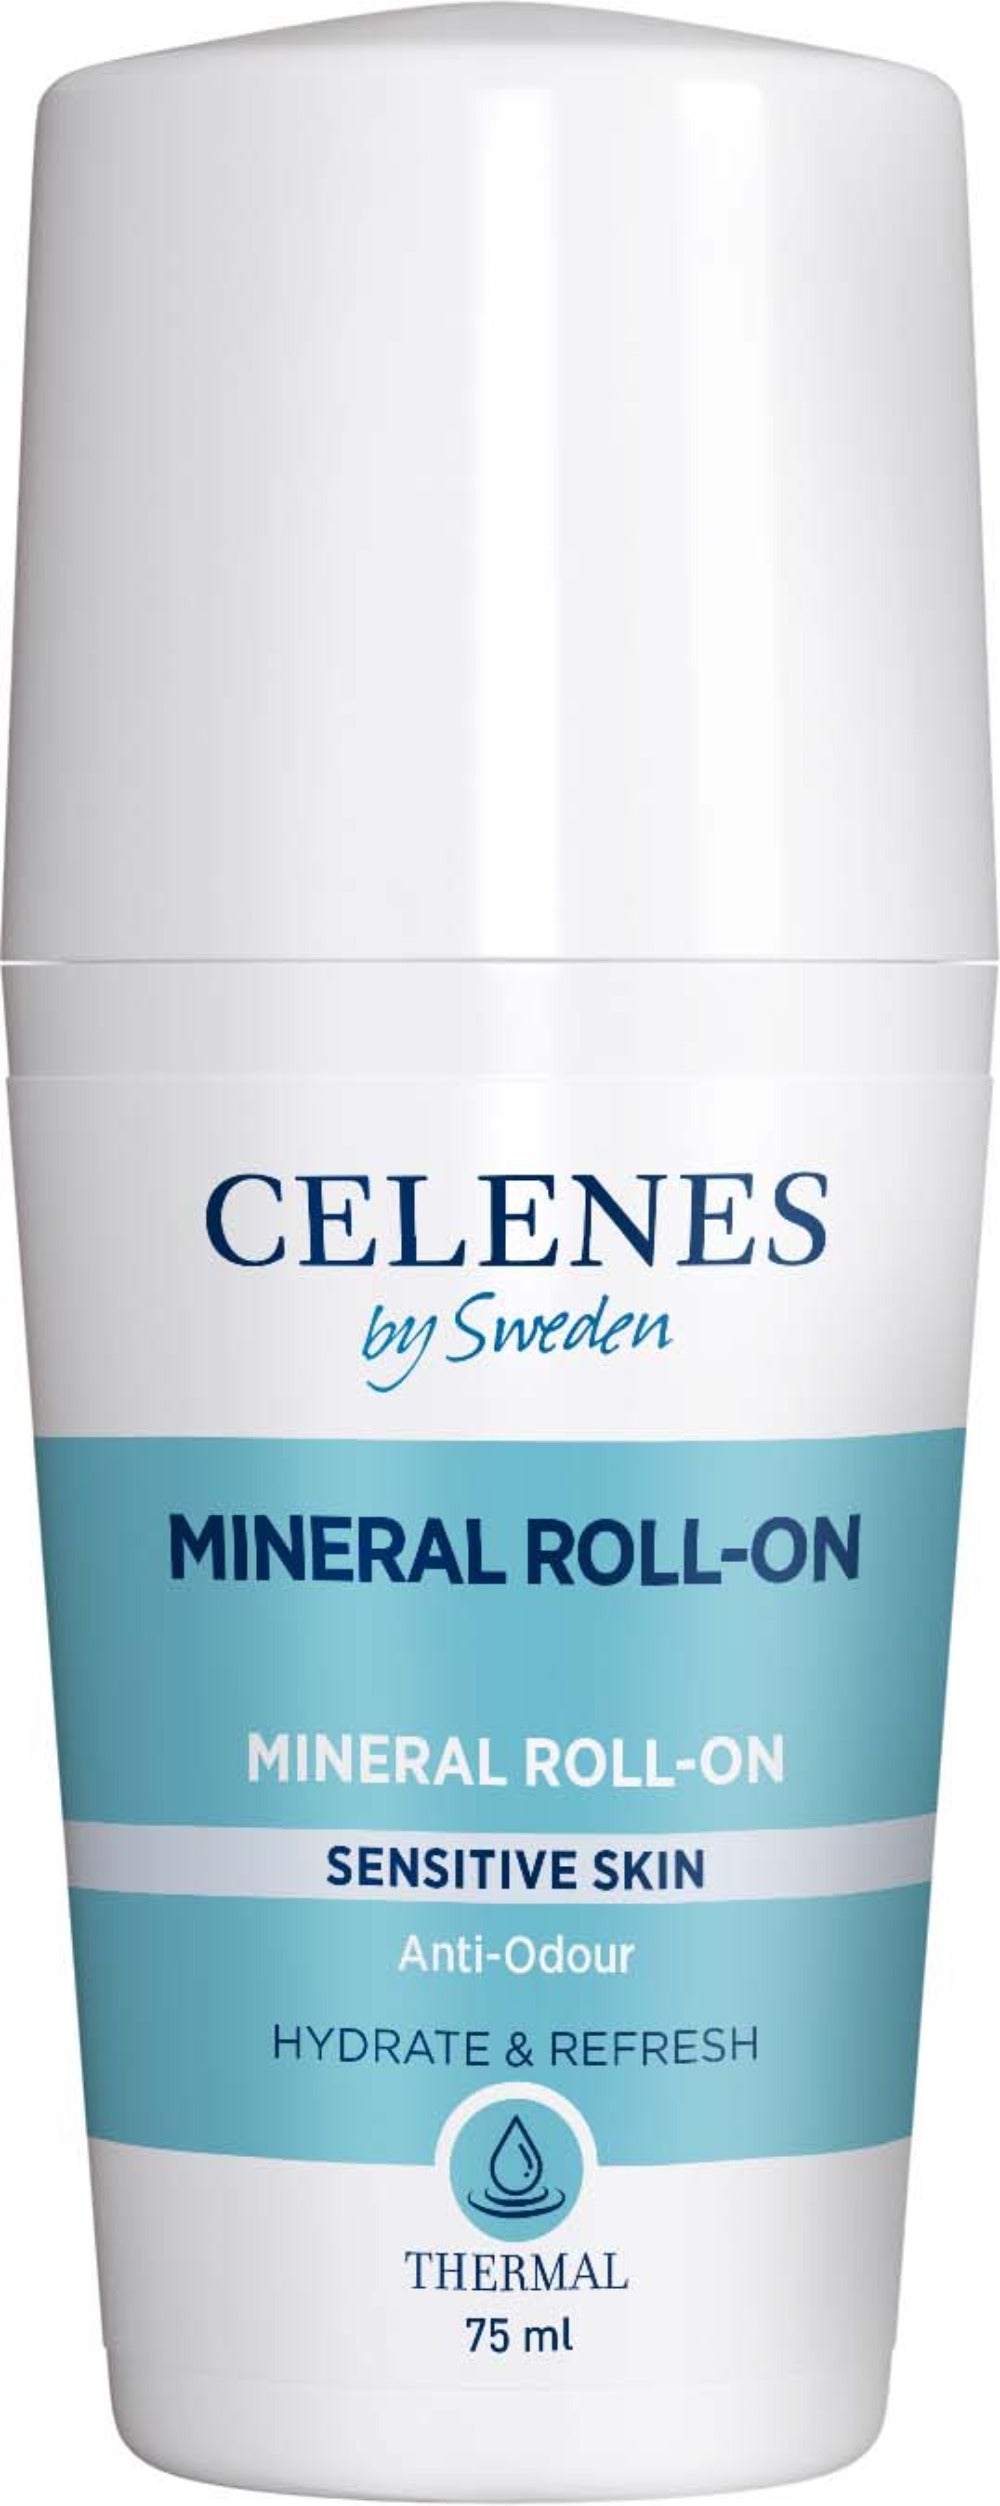 Celenes Thermal Mineral Roll-on Sensitive Skin- 75 ml